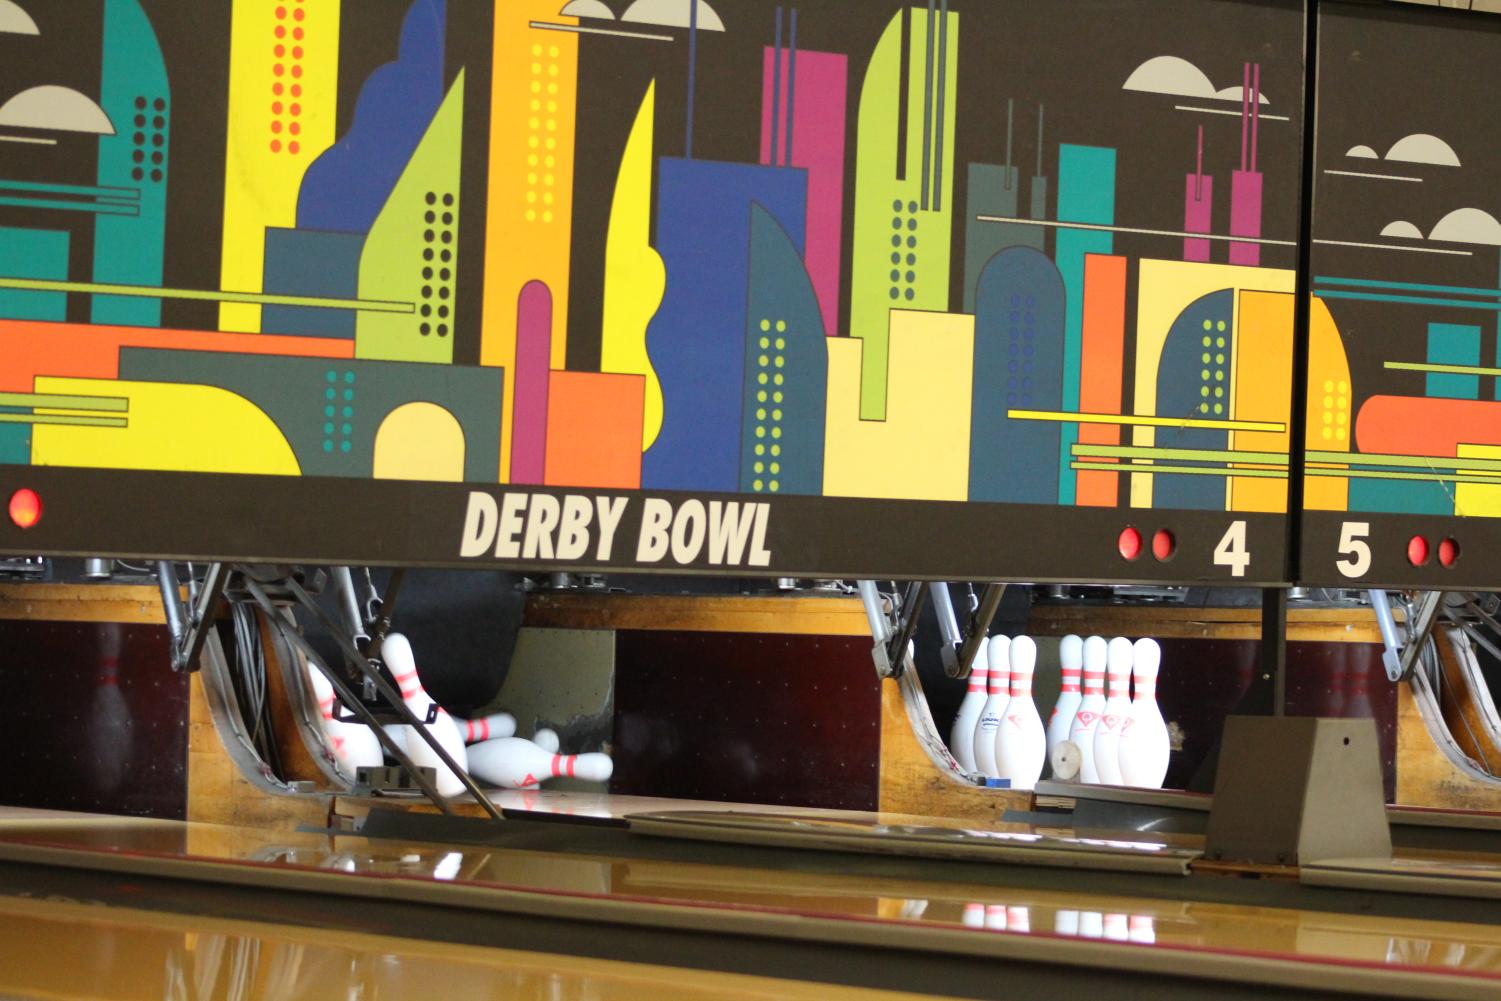 Bowling+practice+at+Derby+Bowl+%28Photos+by+Anita+Phandara%29